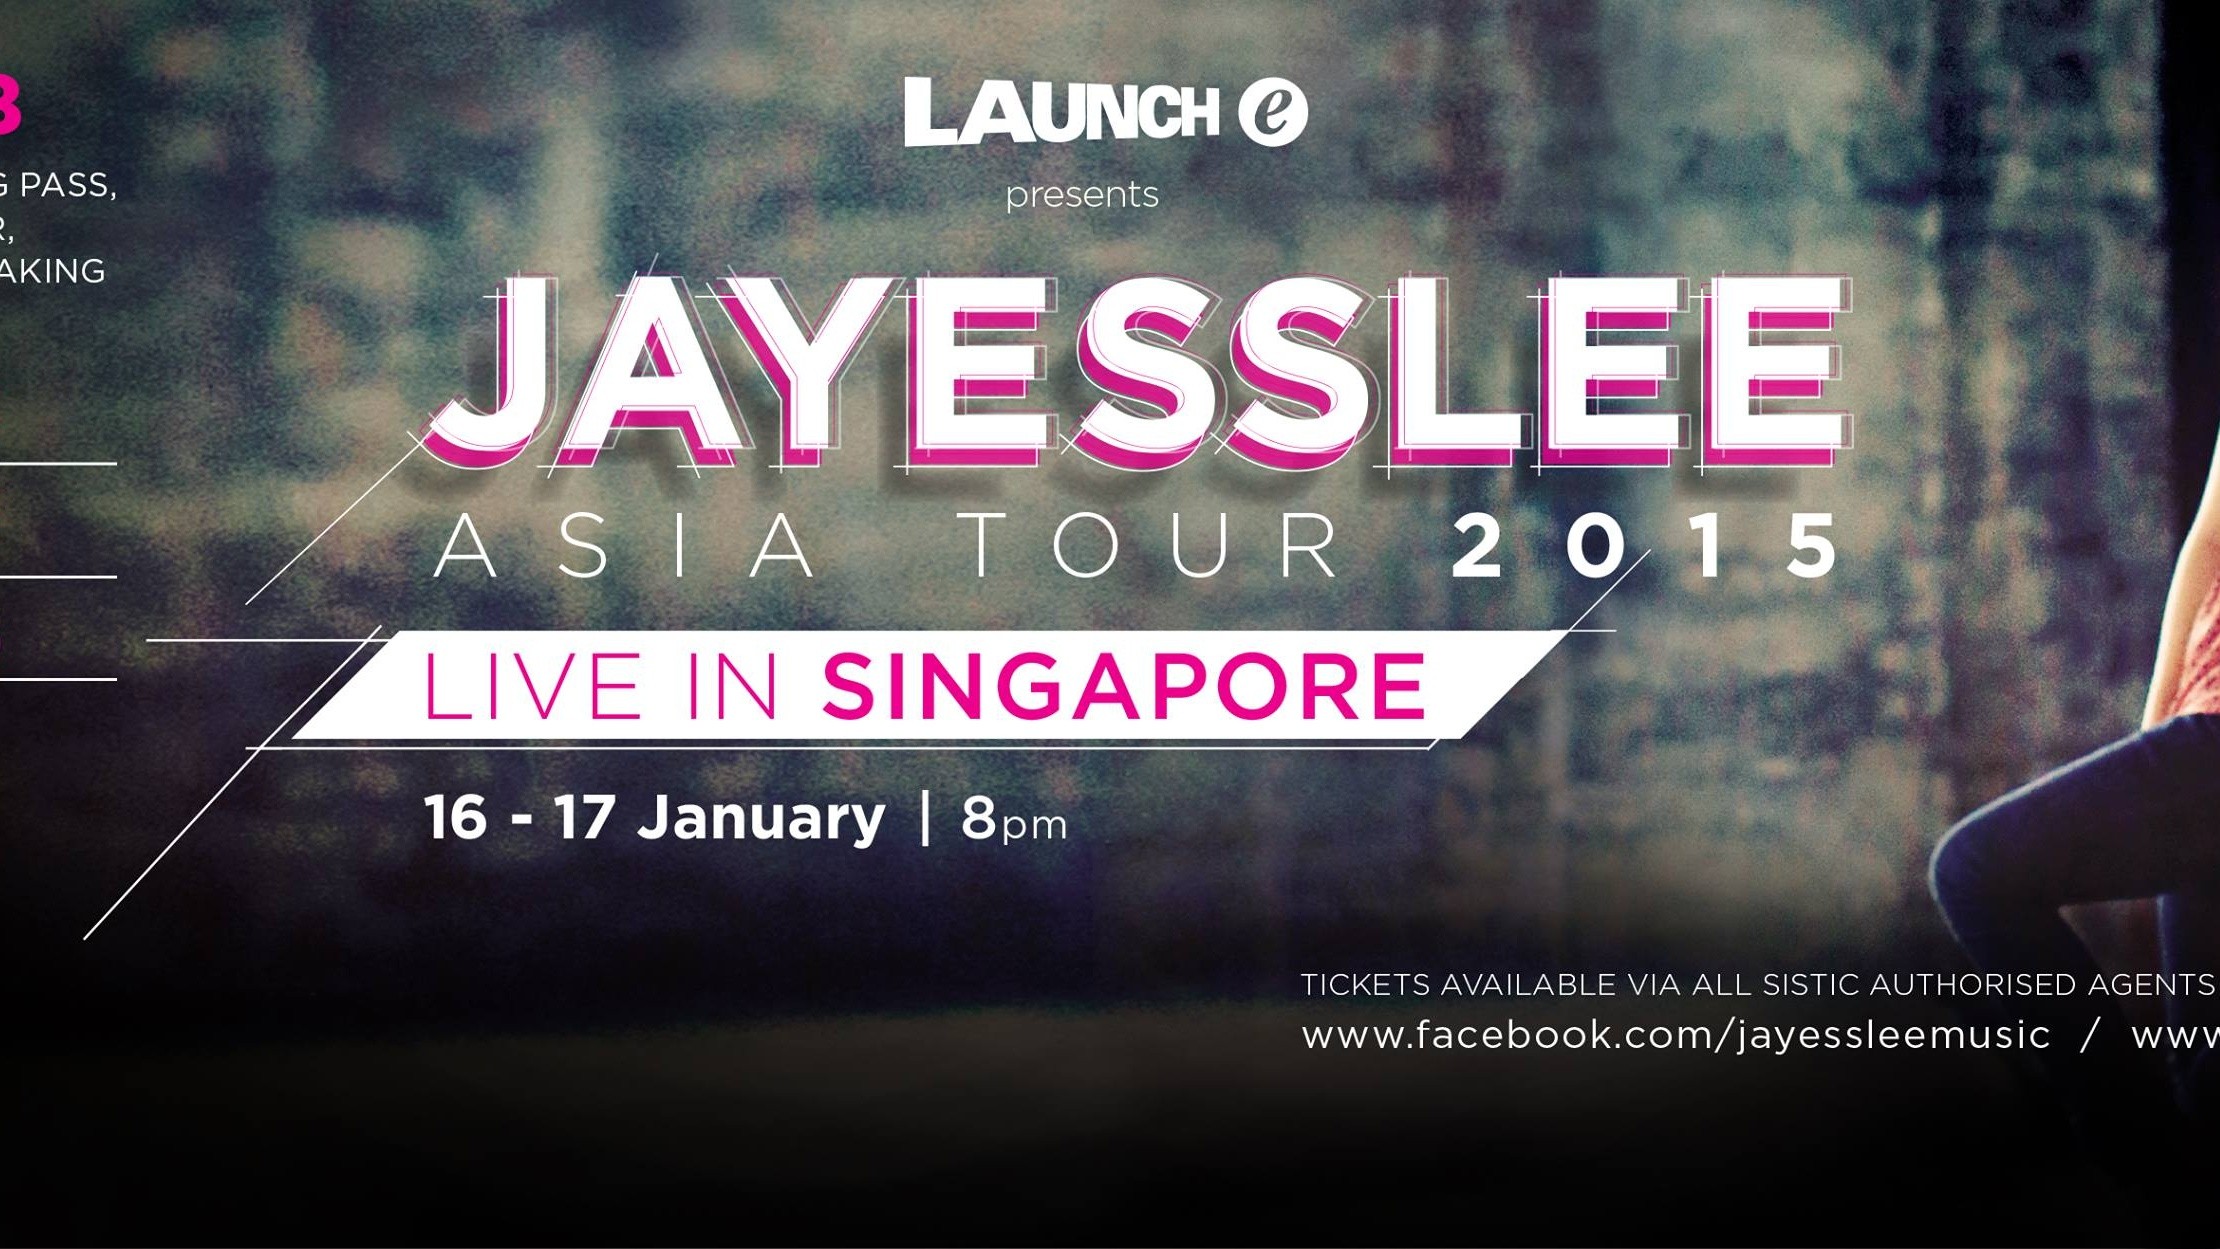 JAYESSLEE ASIA TOUR 2015 - SINGAPORE